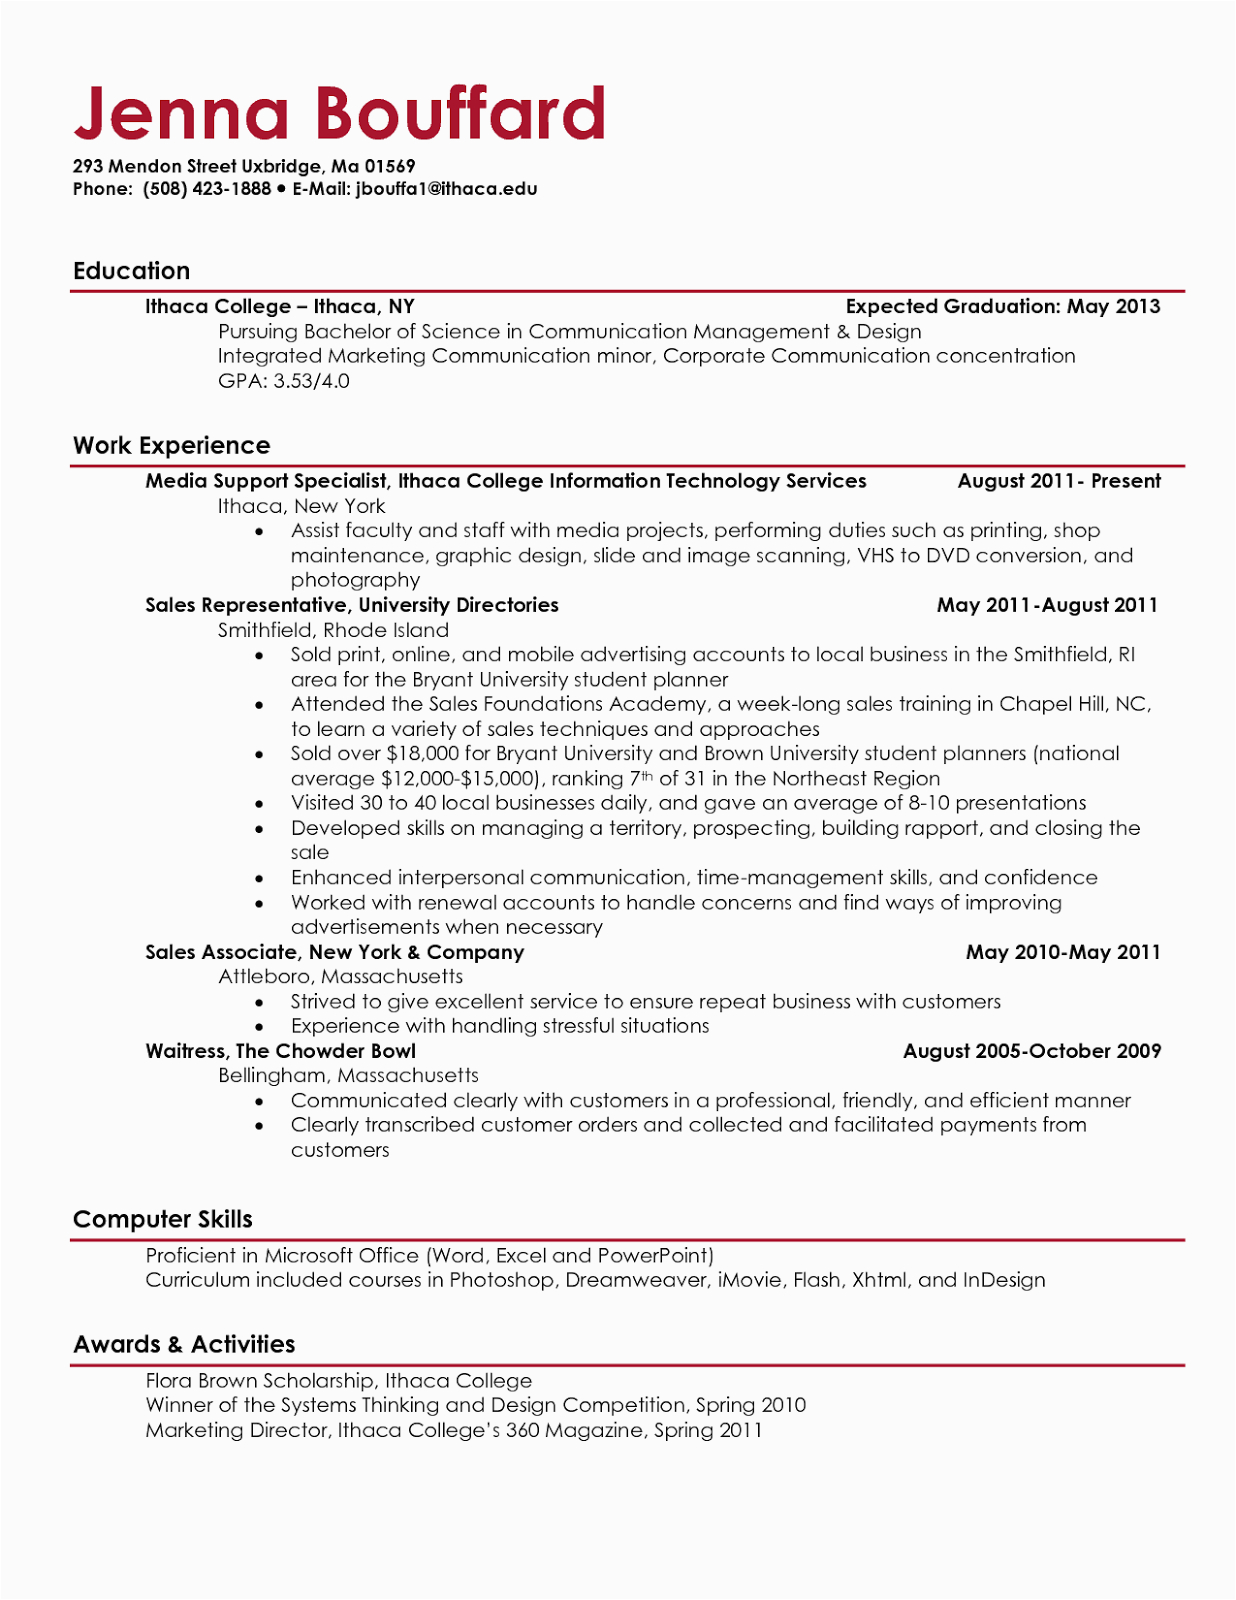 Sample Job Resume for College Student Samples Of Resumes for College Students